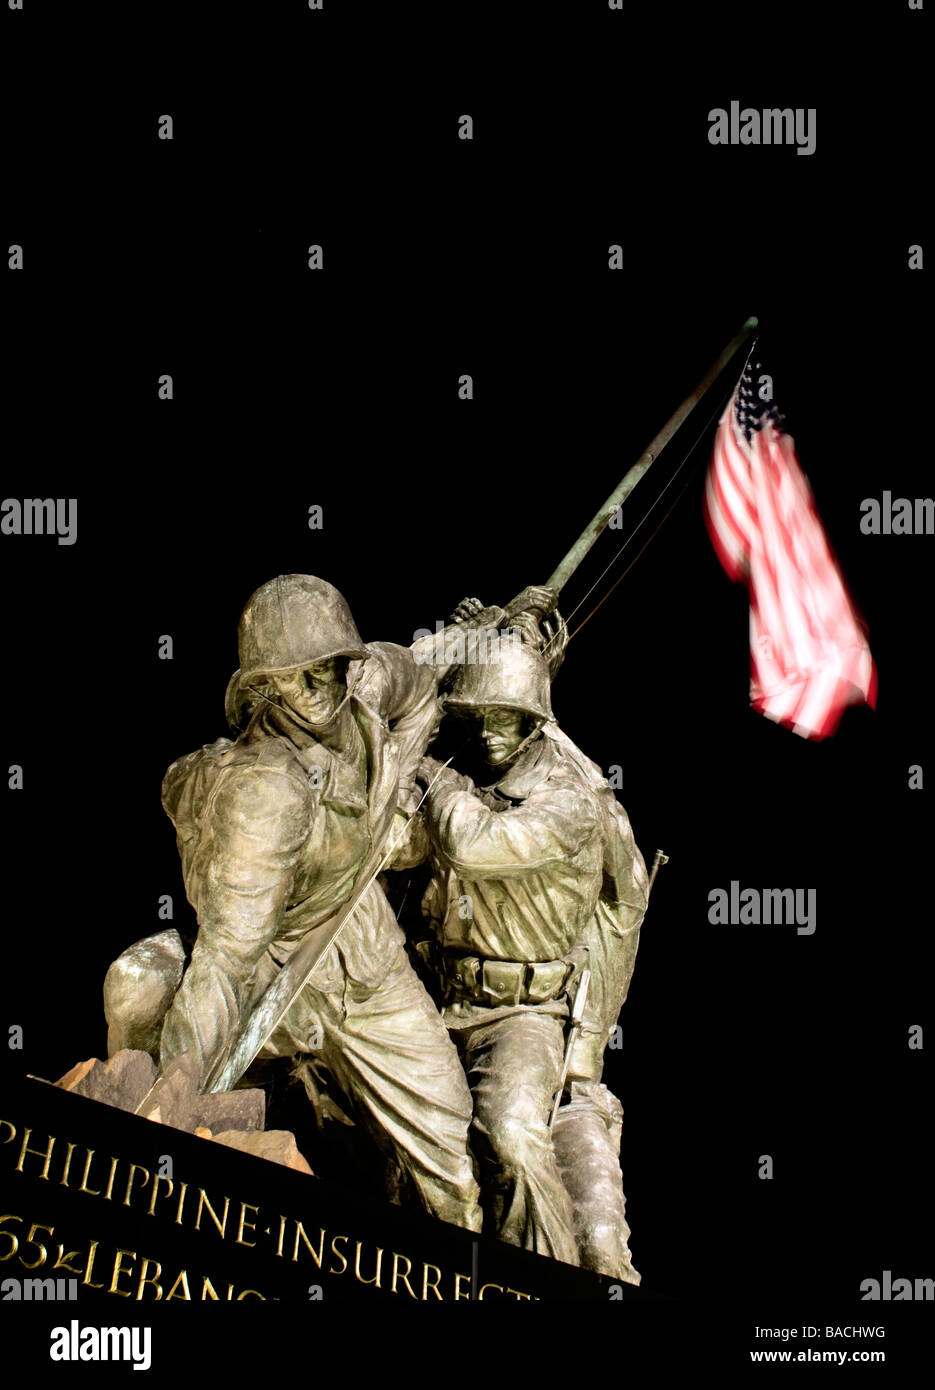 The Iwo Jima Memorial at night, front view, United States Marine Corps, Arlington Virginia Stock Photo